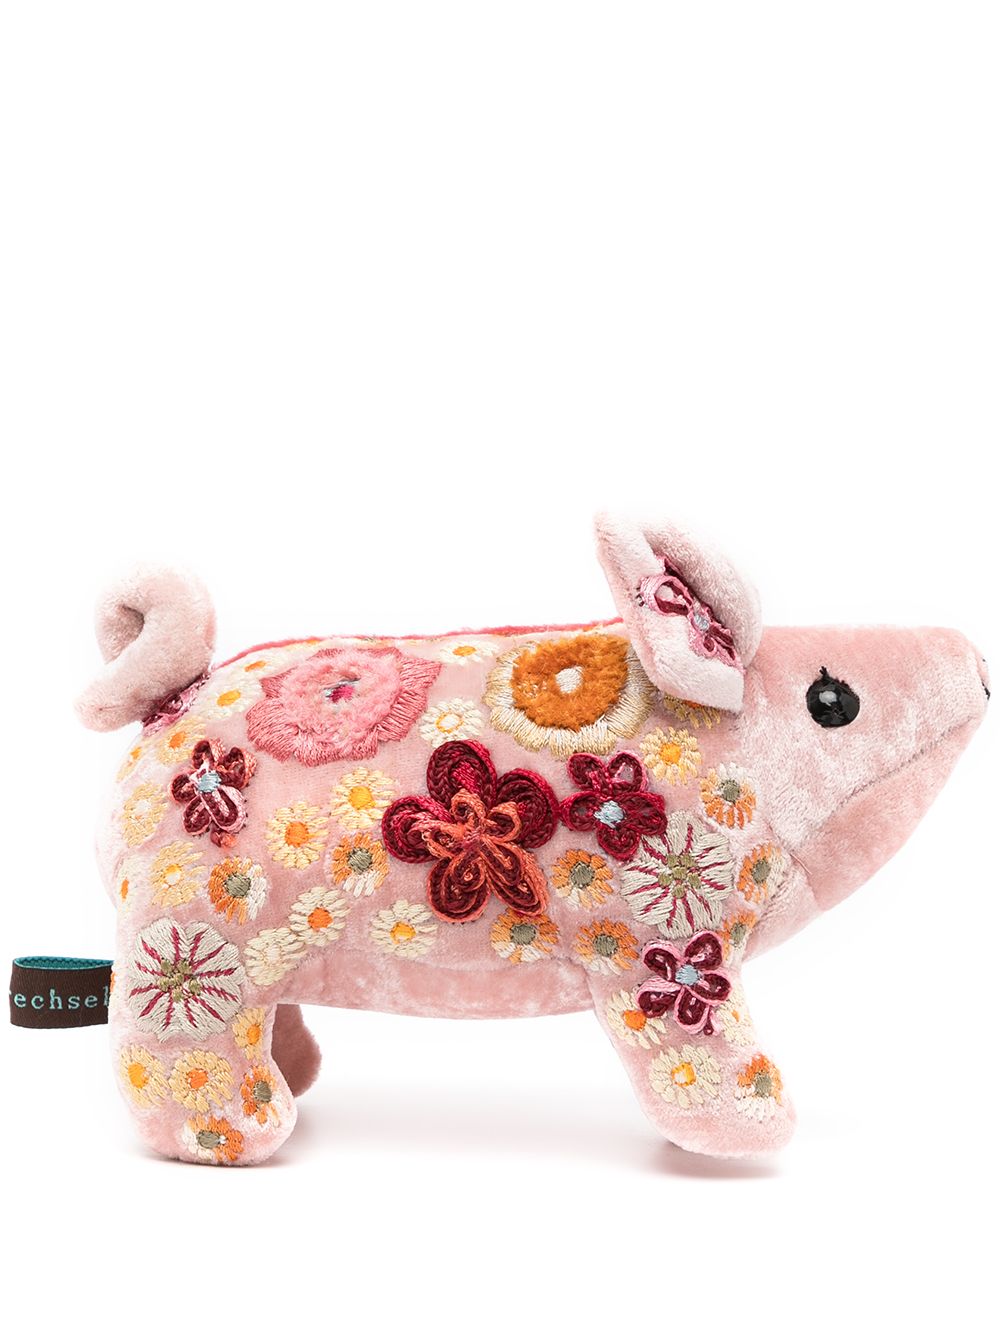 фото Anke drechsel floral-embroidered pig